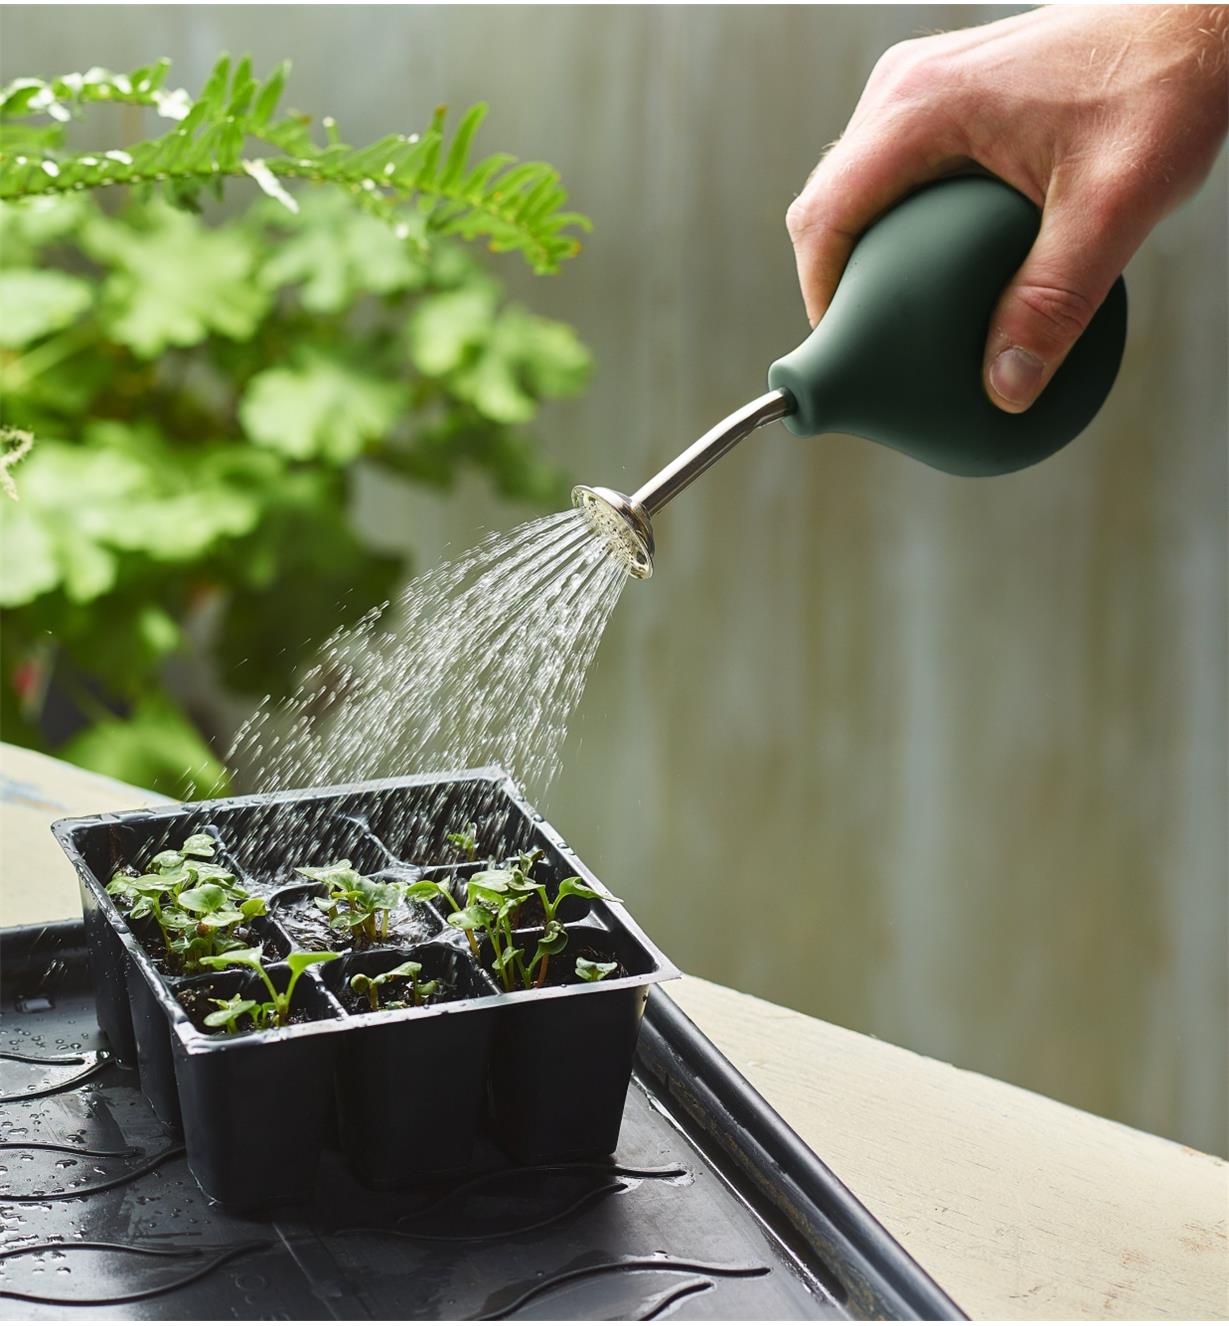 Using the seedling sprayer to lightly water new seedlings